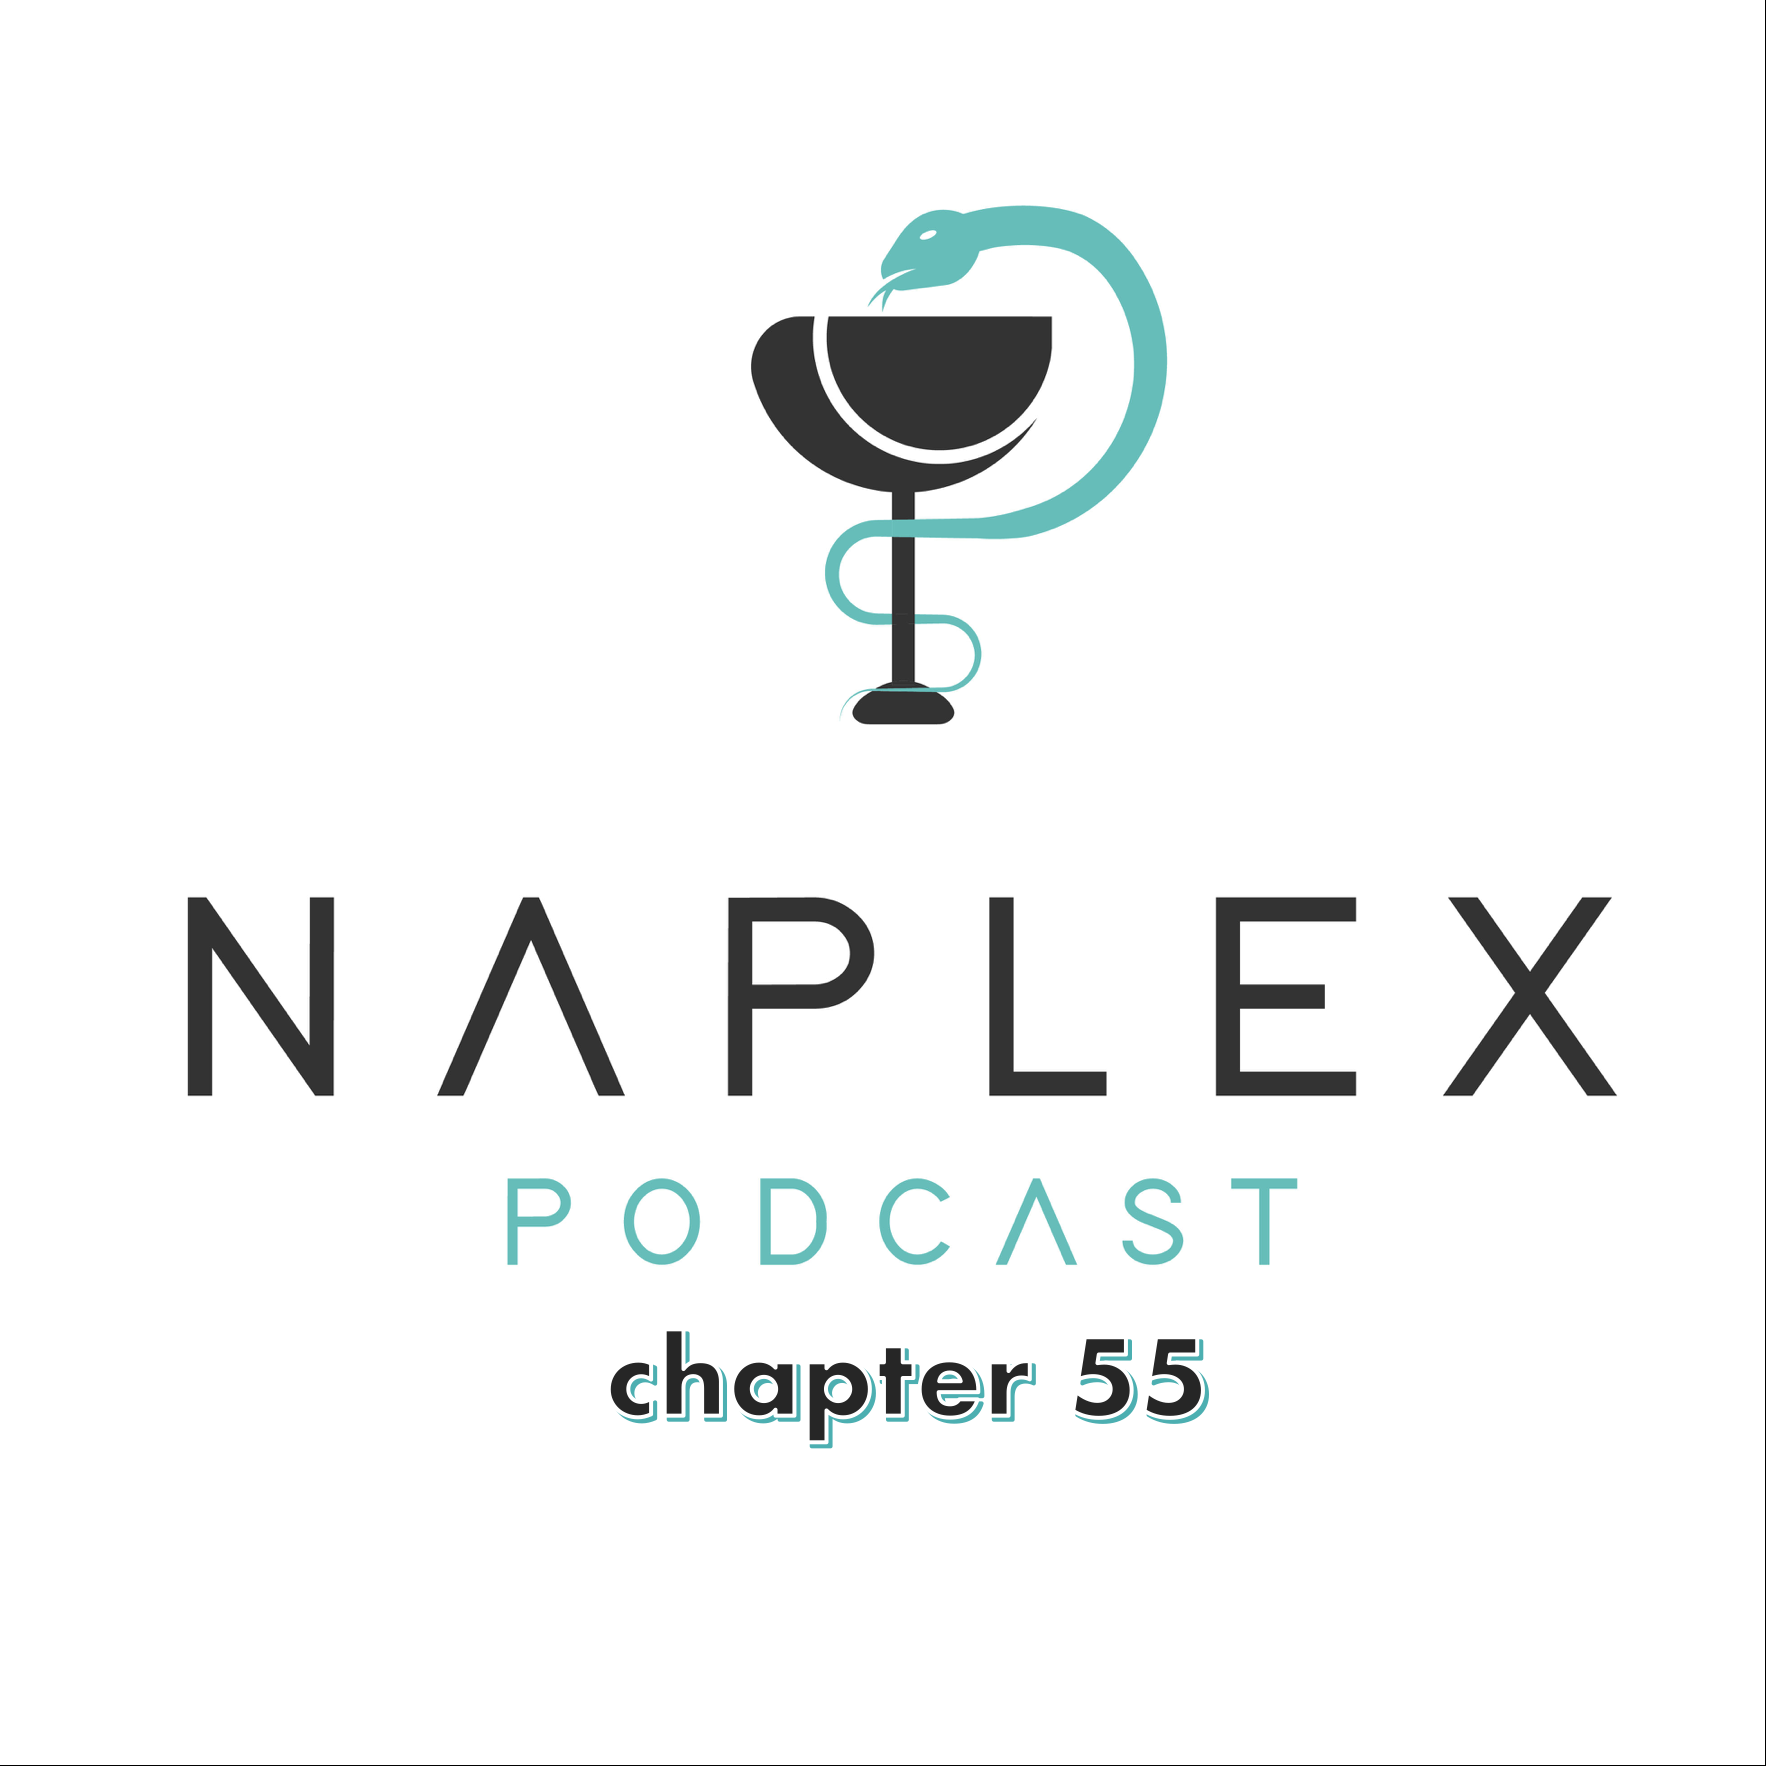 Naplex Podcast | Chapter 55: Bipolar Disorder Treatment